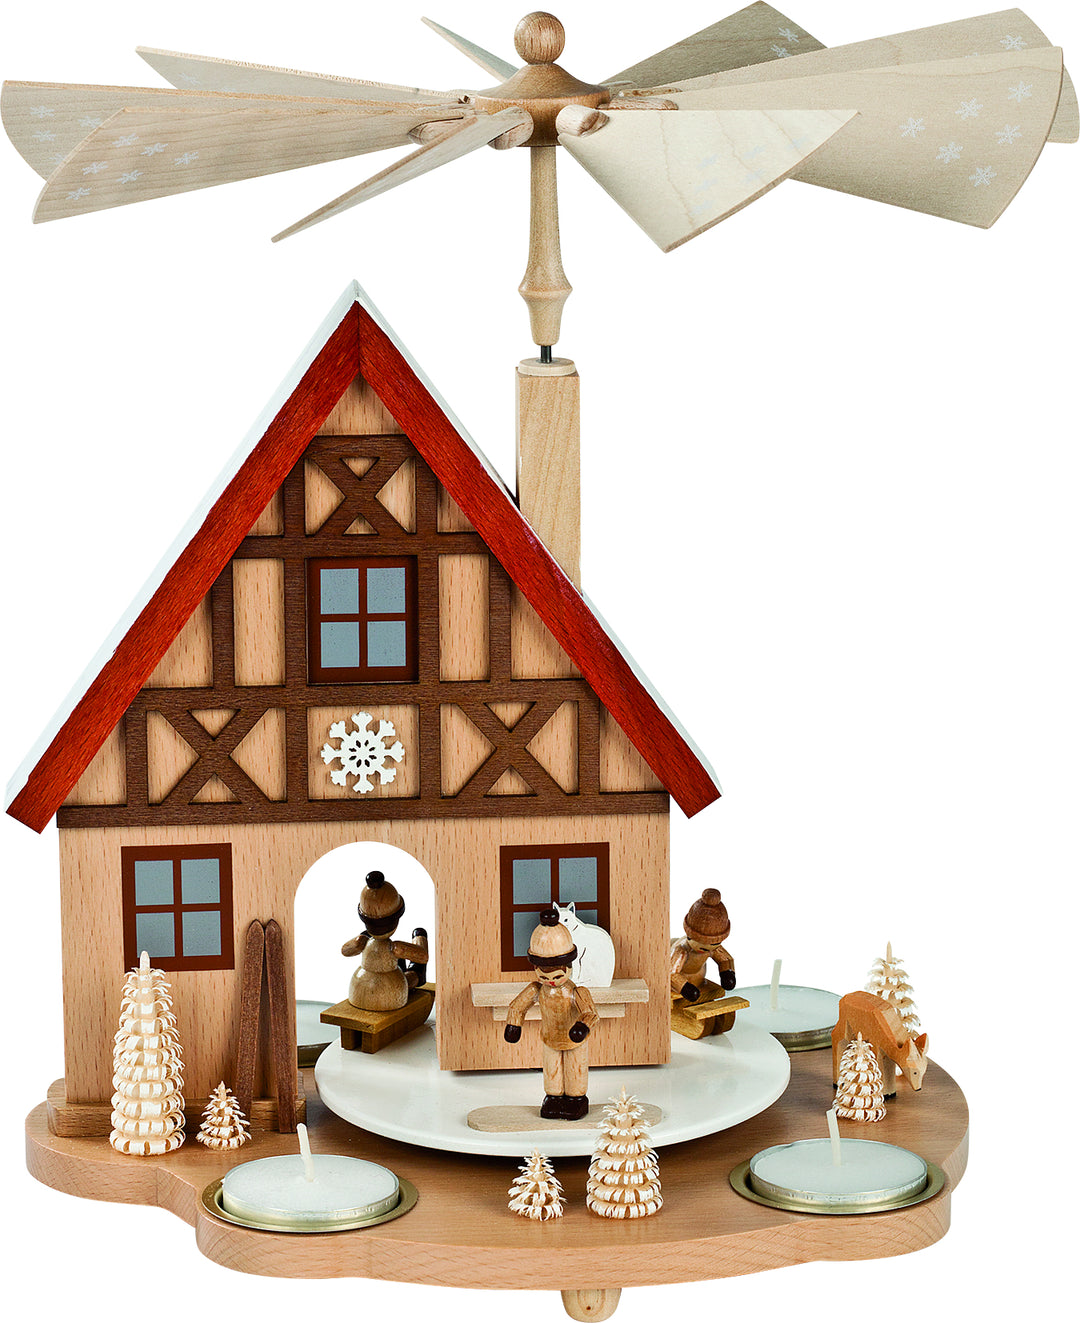 Glässer Folk Art 'Table Pyramid House Winter Children' 29cm